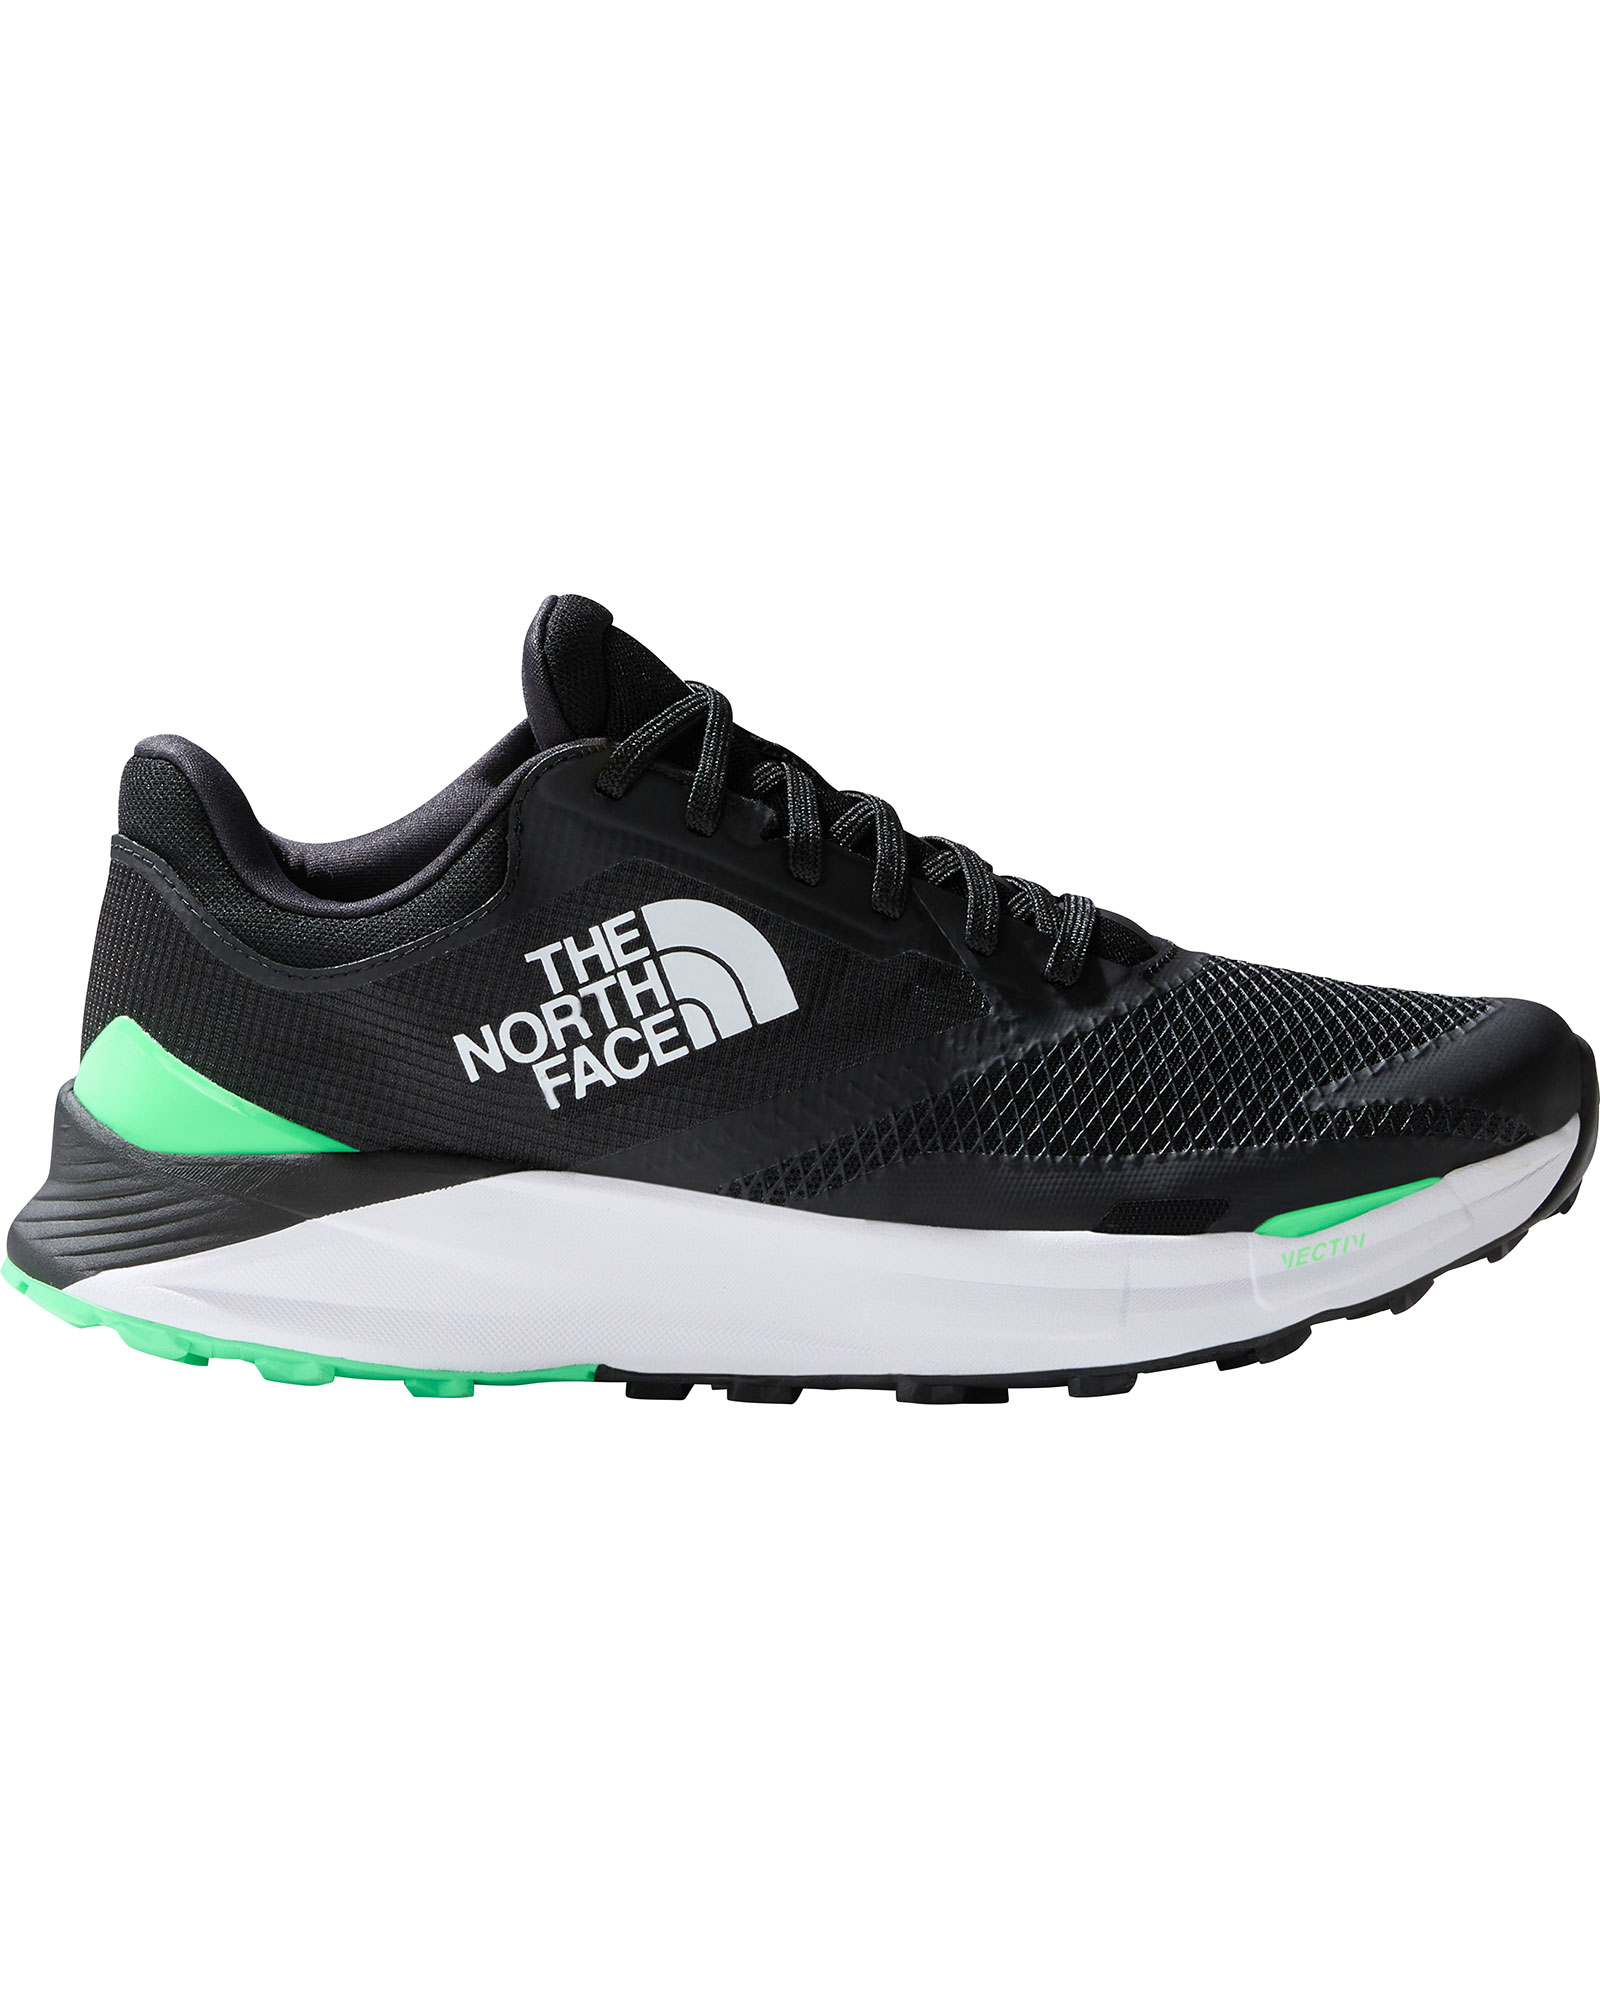 The North Face Vectiv Enduris 3 Men’s Trail Shoes - TNF Black/Chlorophyll Green UK 9.5